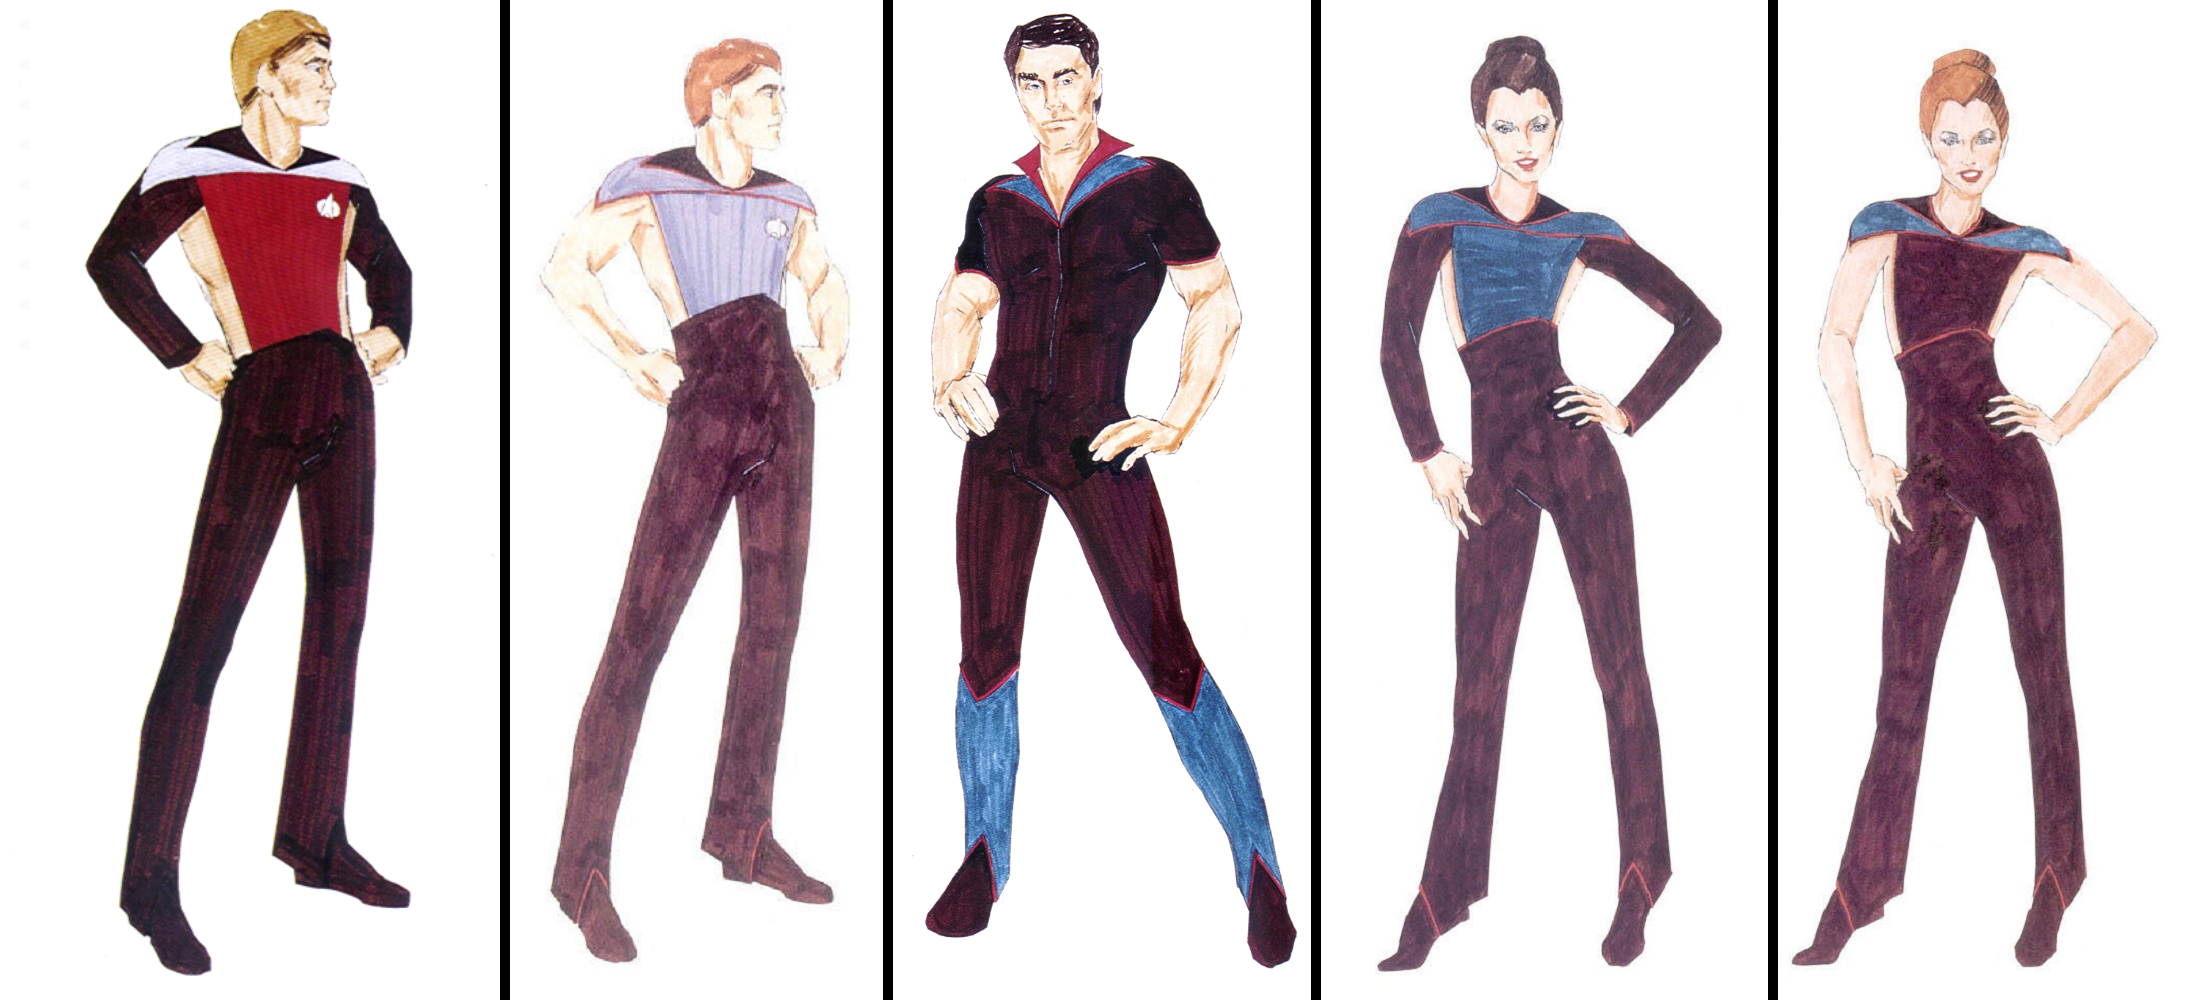 TNG jumpsuit costume sketches - Star Trek Costume Guide